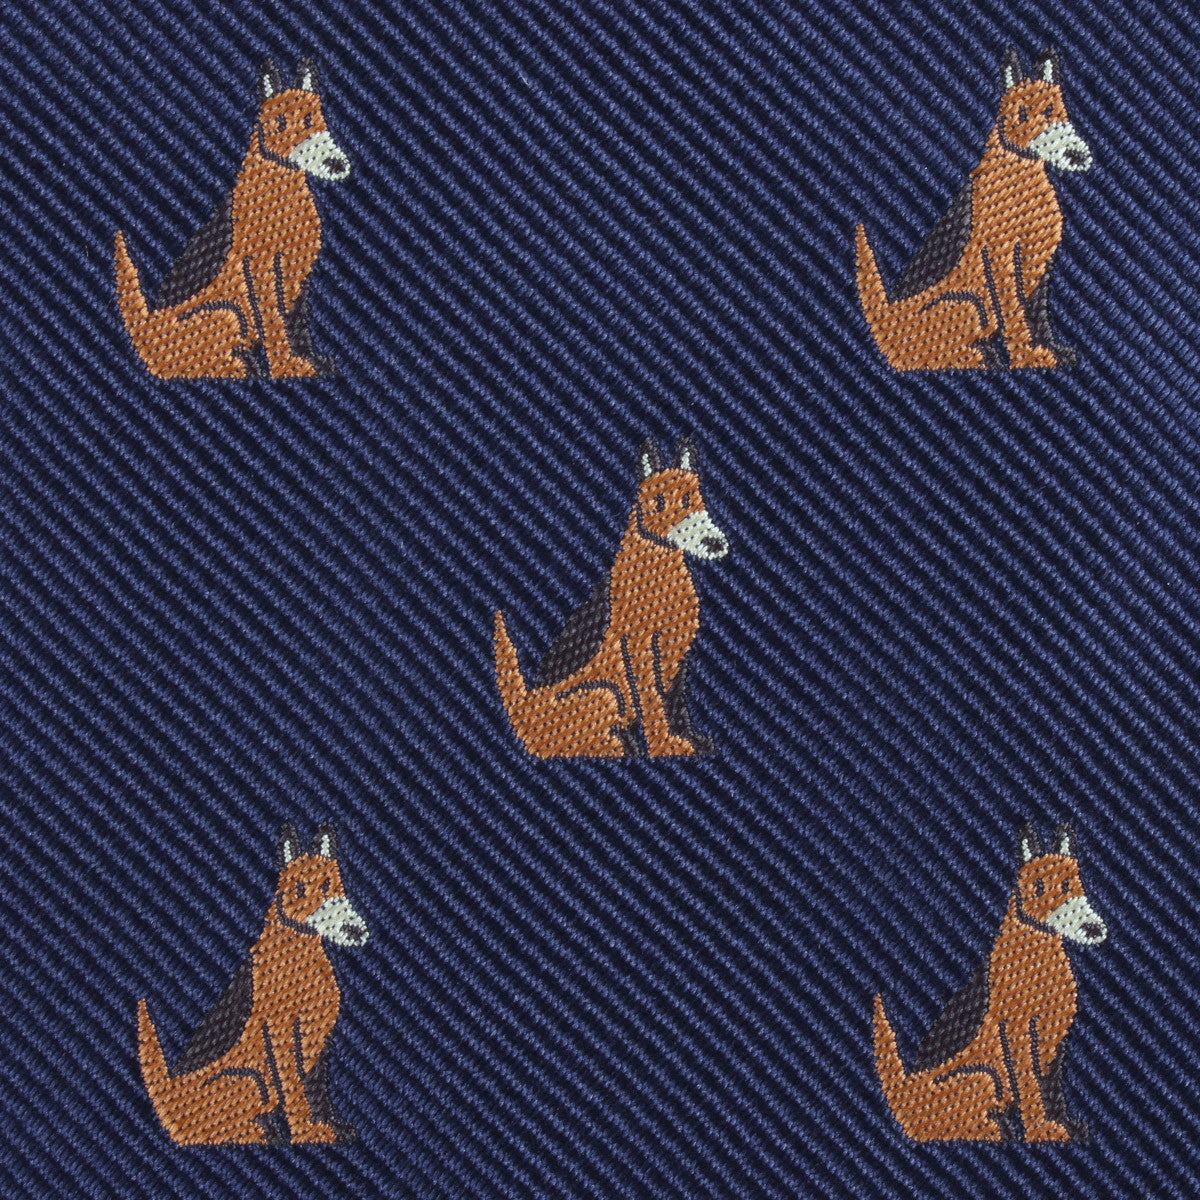 German Shepherd Dog Fabric Pocket Square